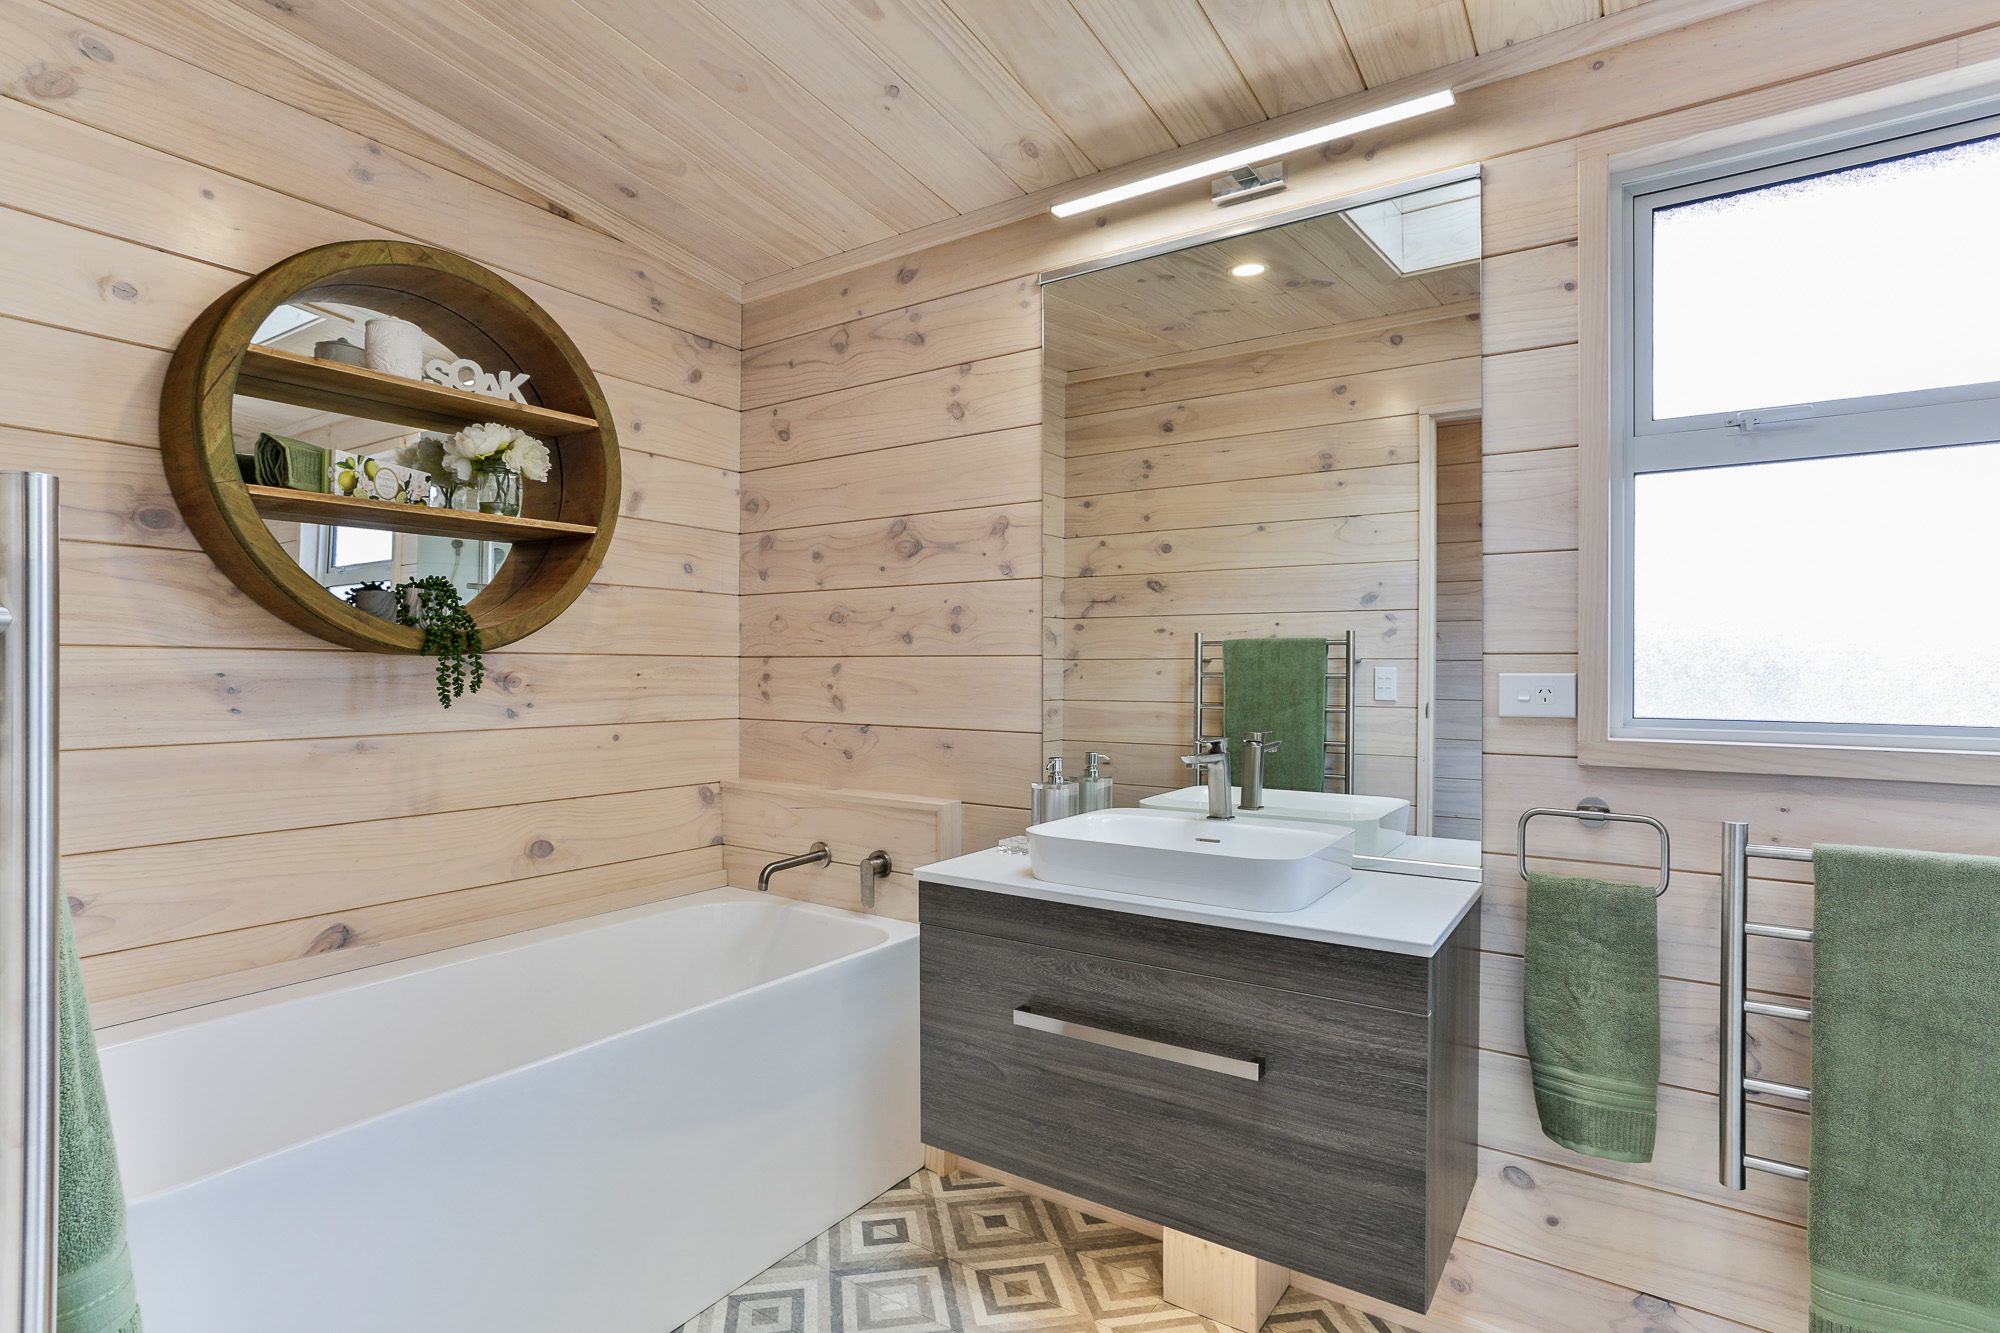 Lockwood main bathroom in Lifestyler Design with mirror shelf